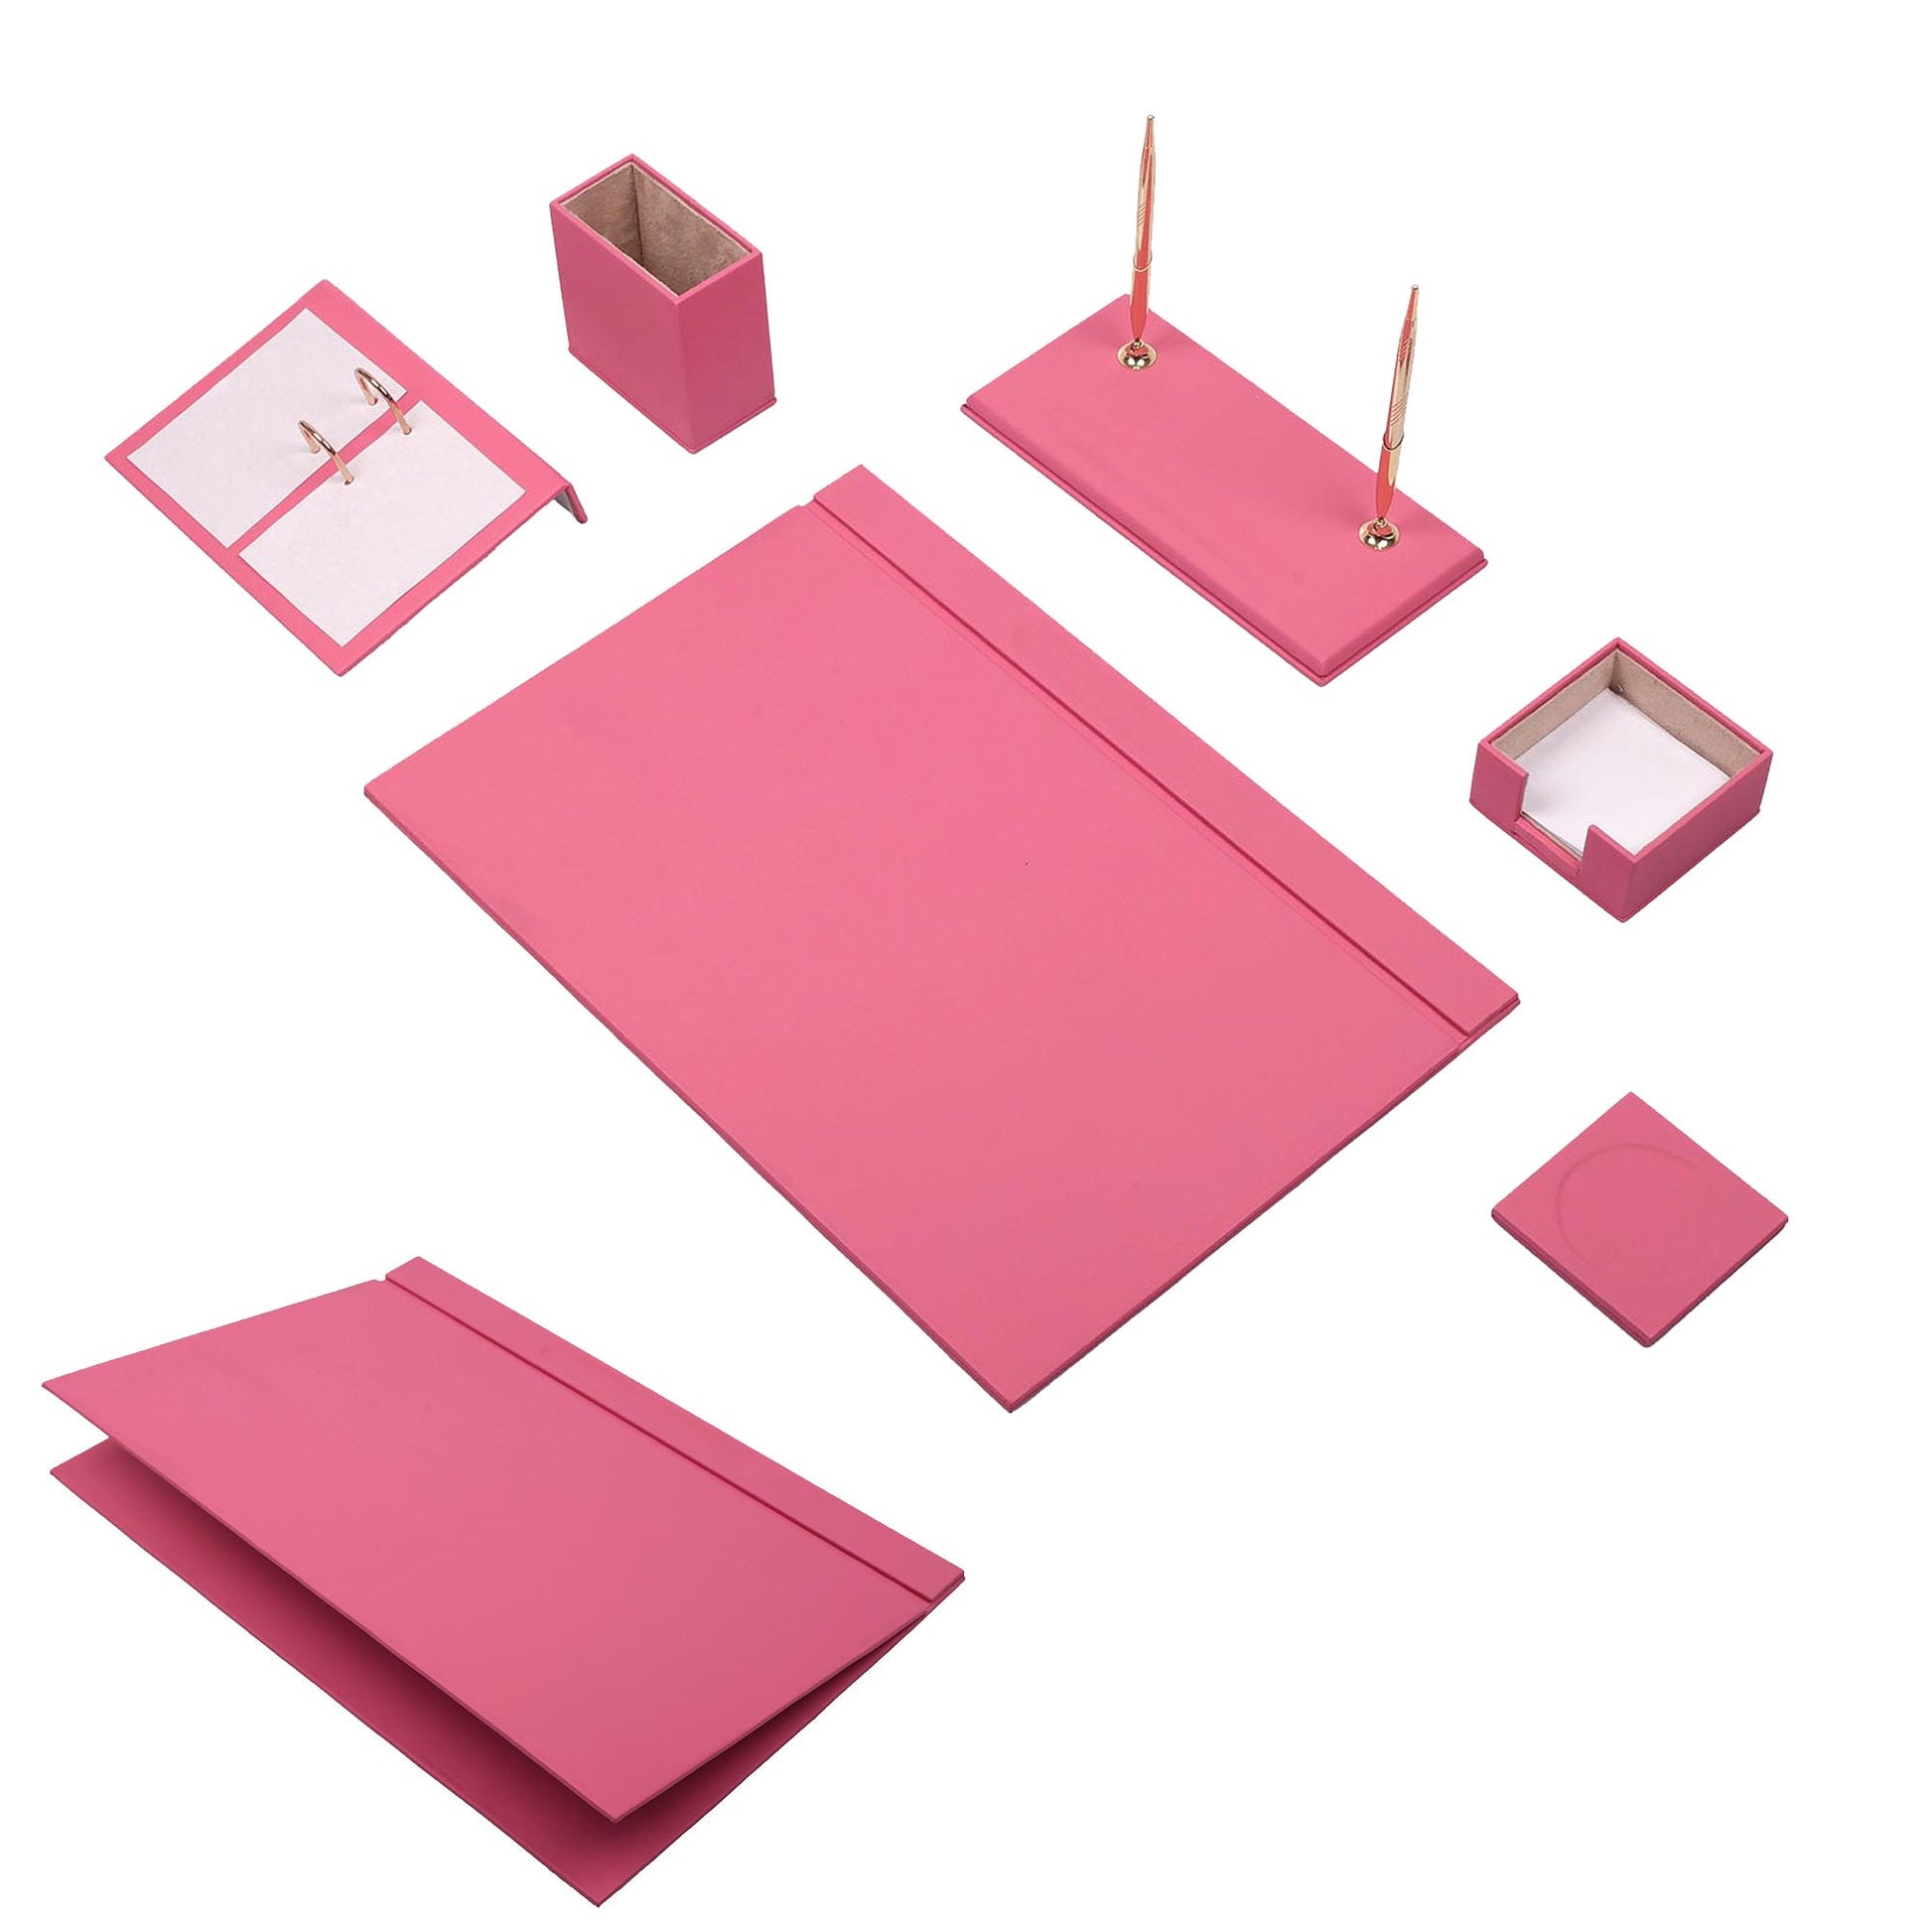 Women's pink leather desk table SET - 8 pcs office accessories